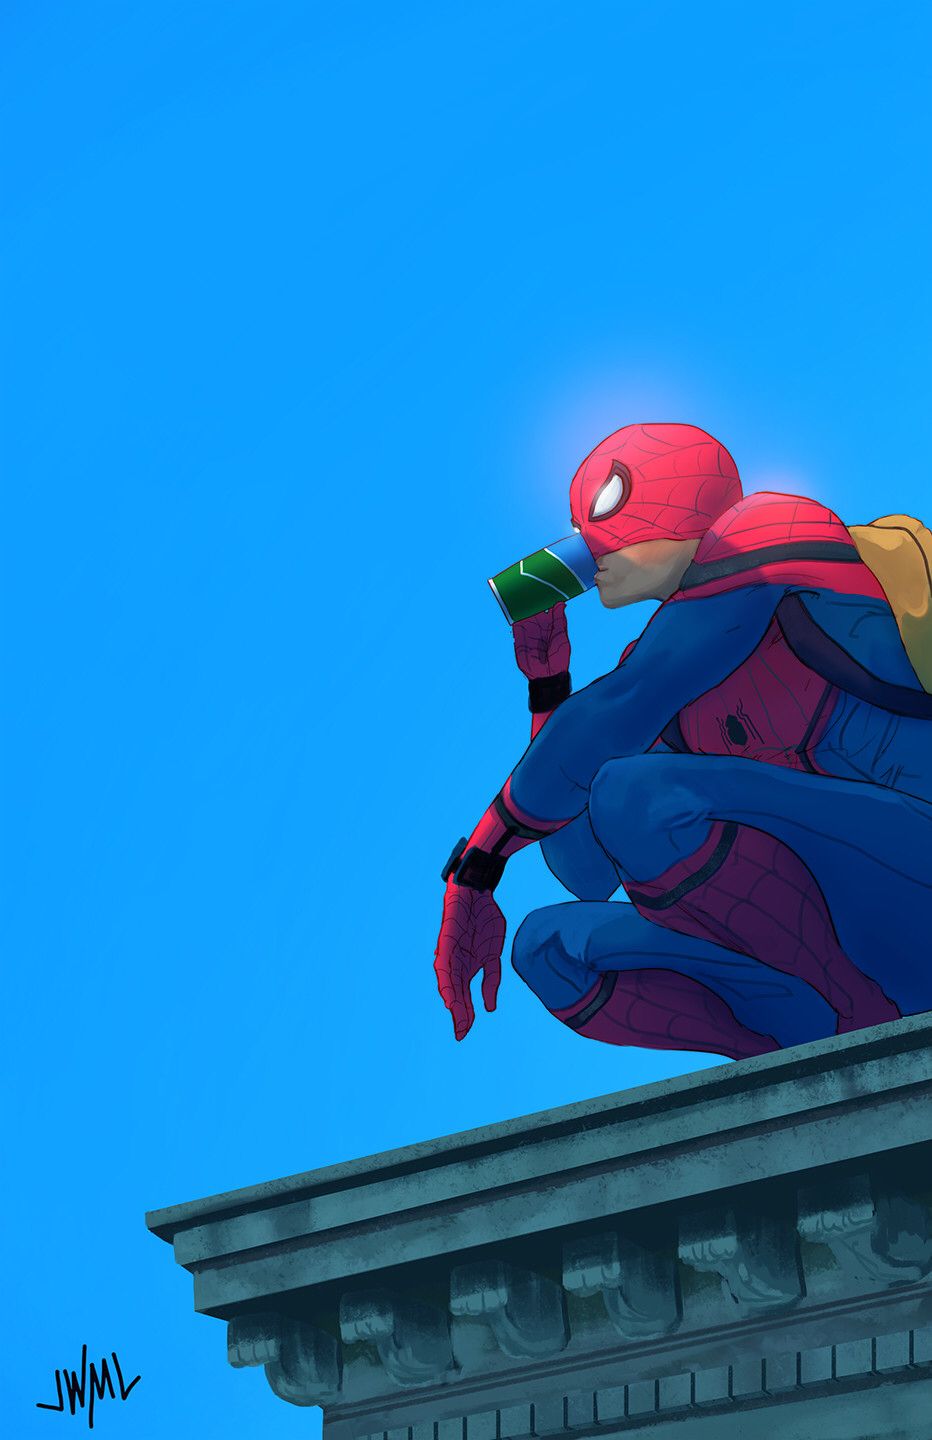 örümcek adam wallpaper,superhero,fictional character,sky,spider man